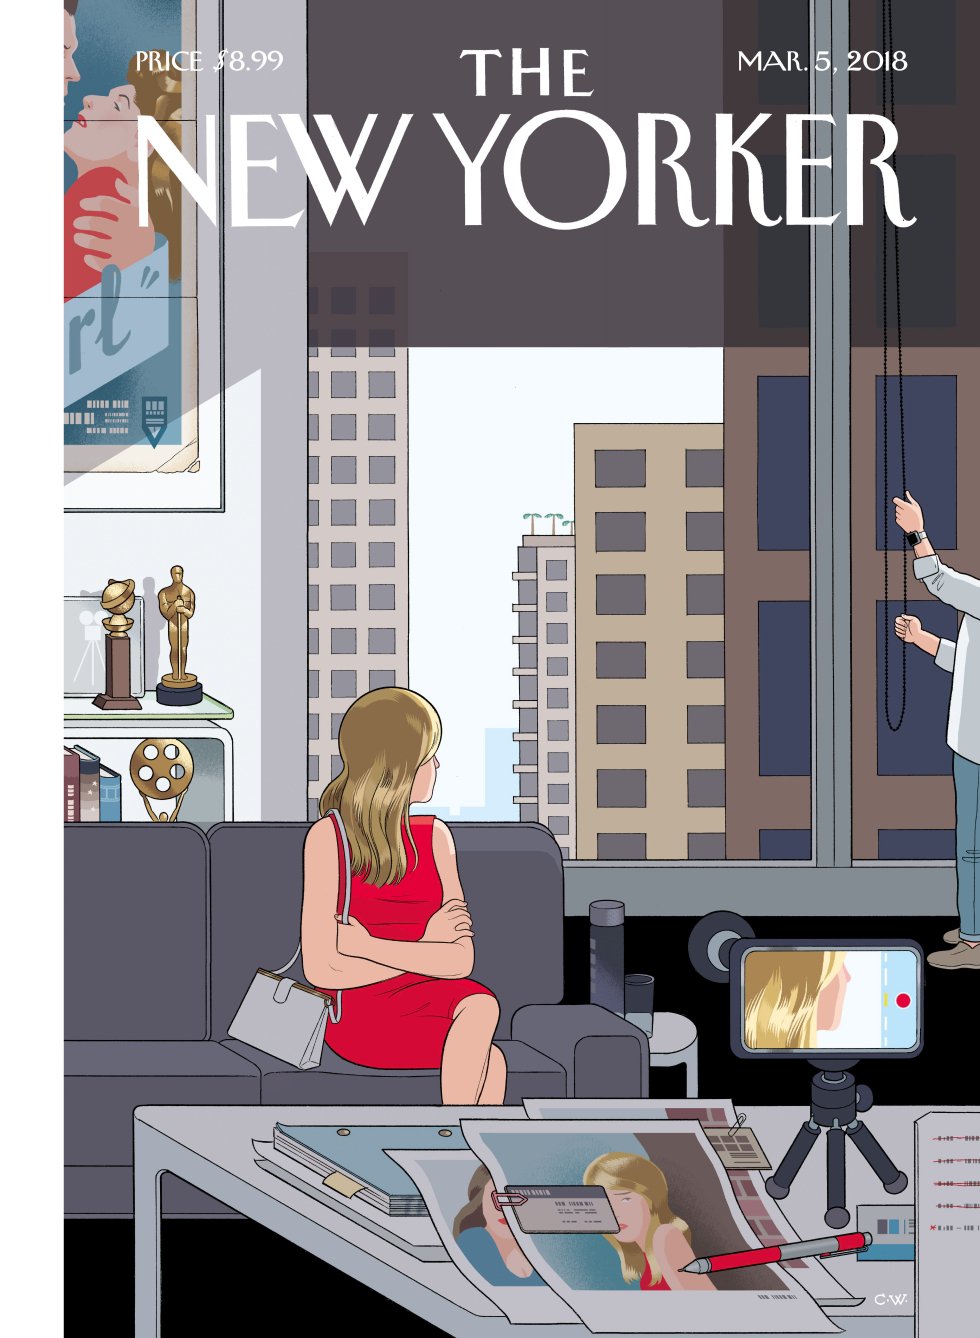 The New Yorker.jpg